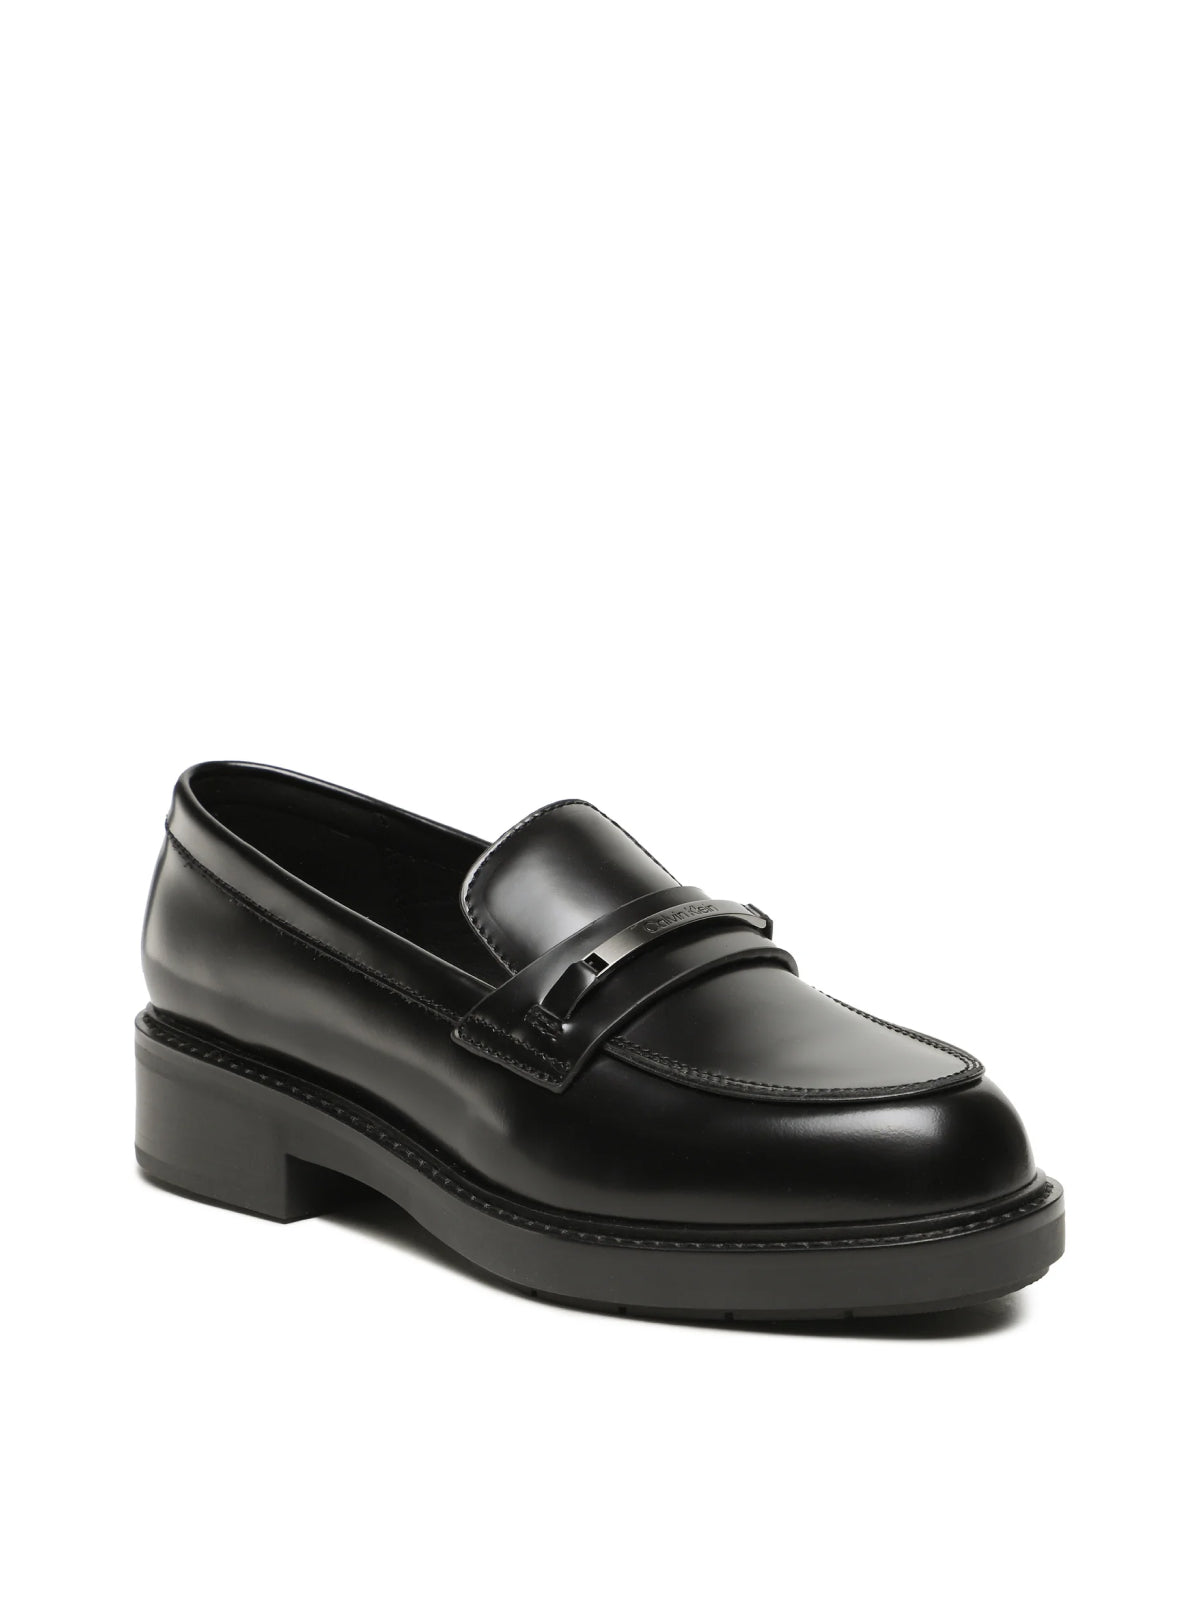 Calvin Klein-OUTLET-SALE-Logo Detail Loafers-ARCHIVIST